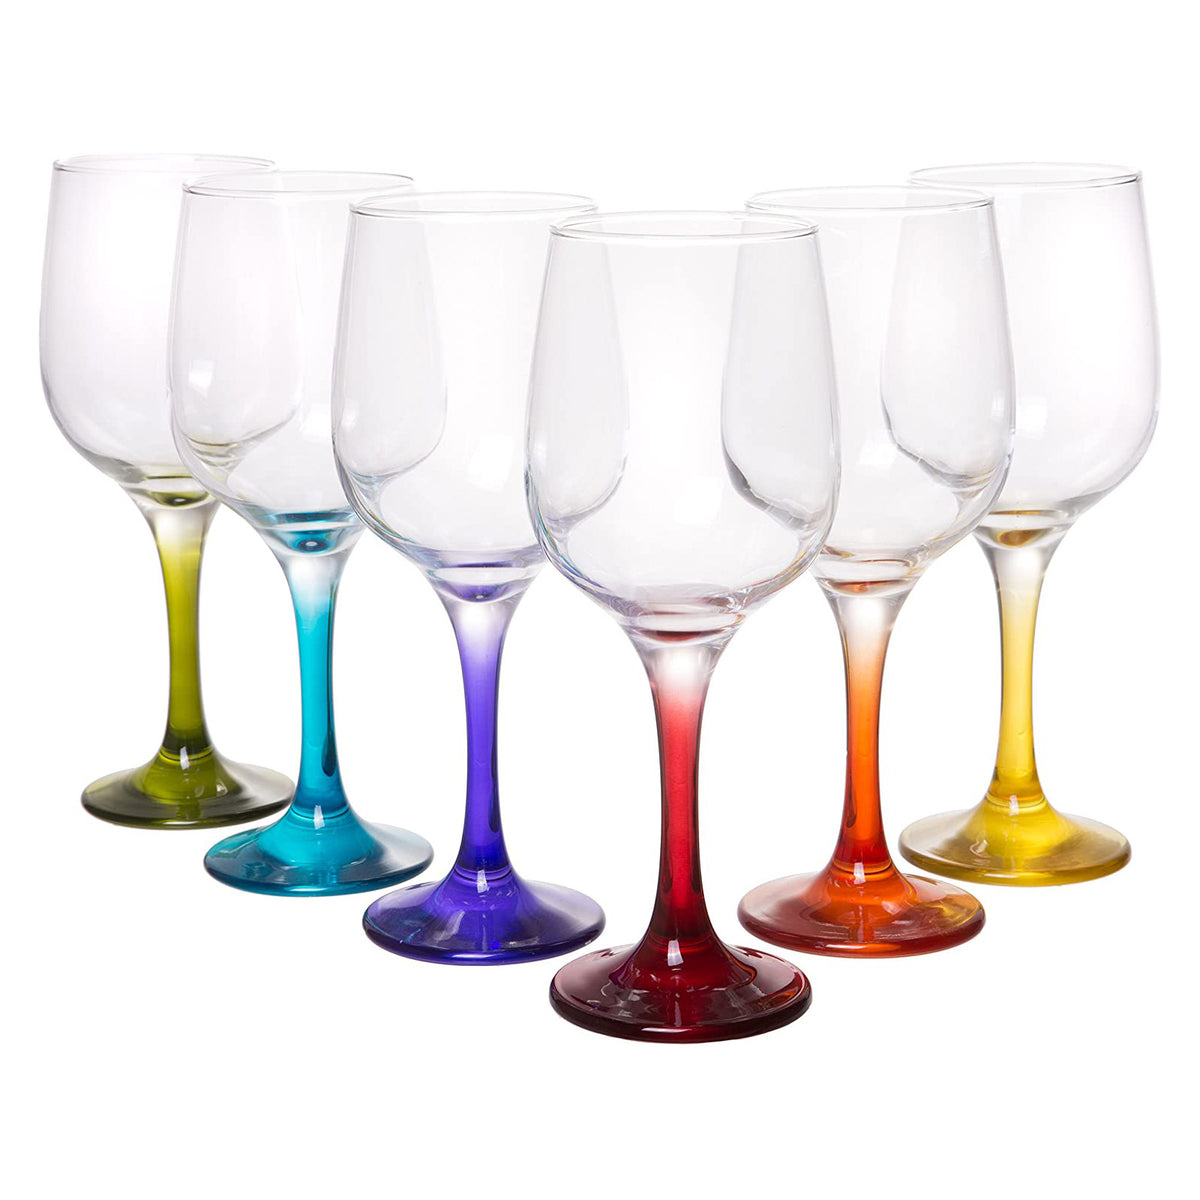 Orange Stem Crystal White Wine Glasses 15 oz (Set of 2)